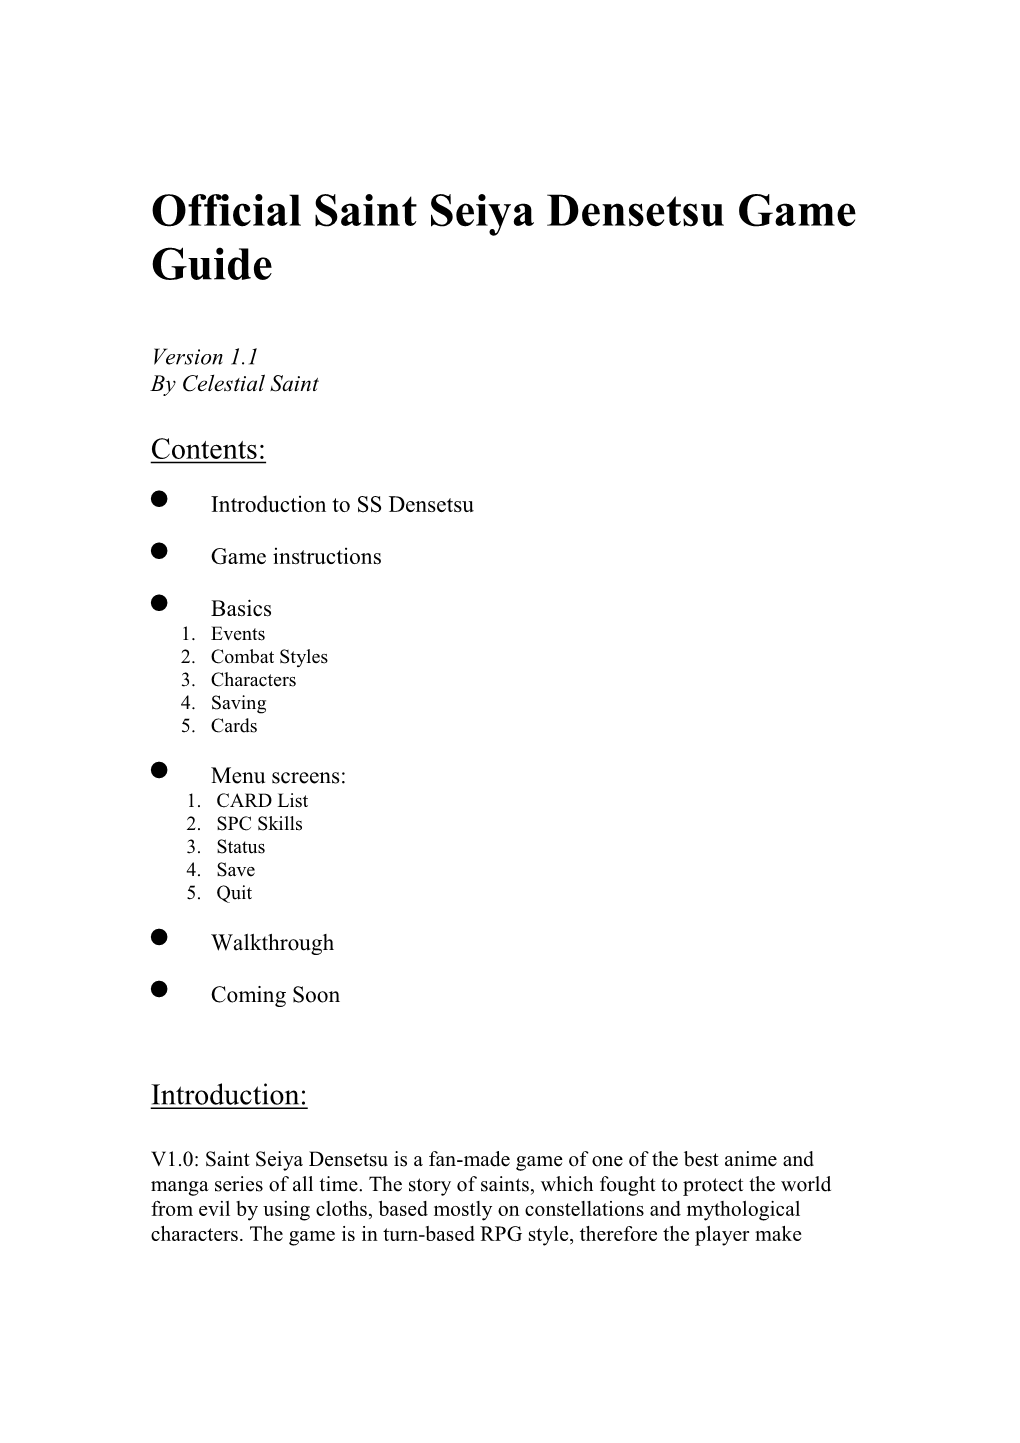 Saint Seiya Densetsu Official Game Guide